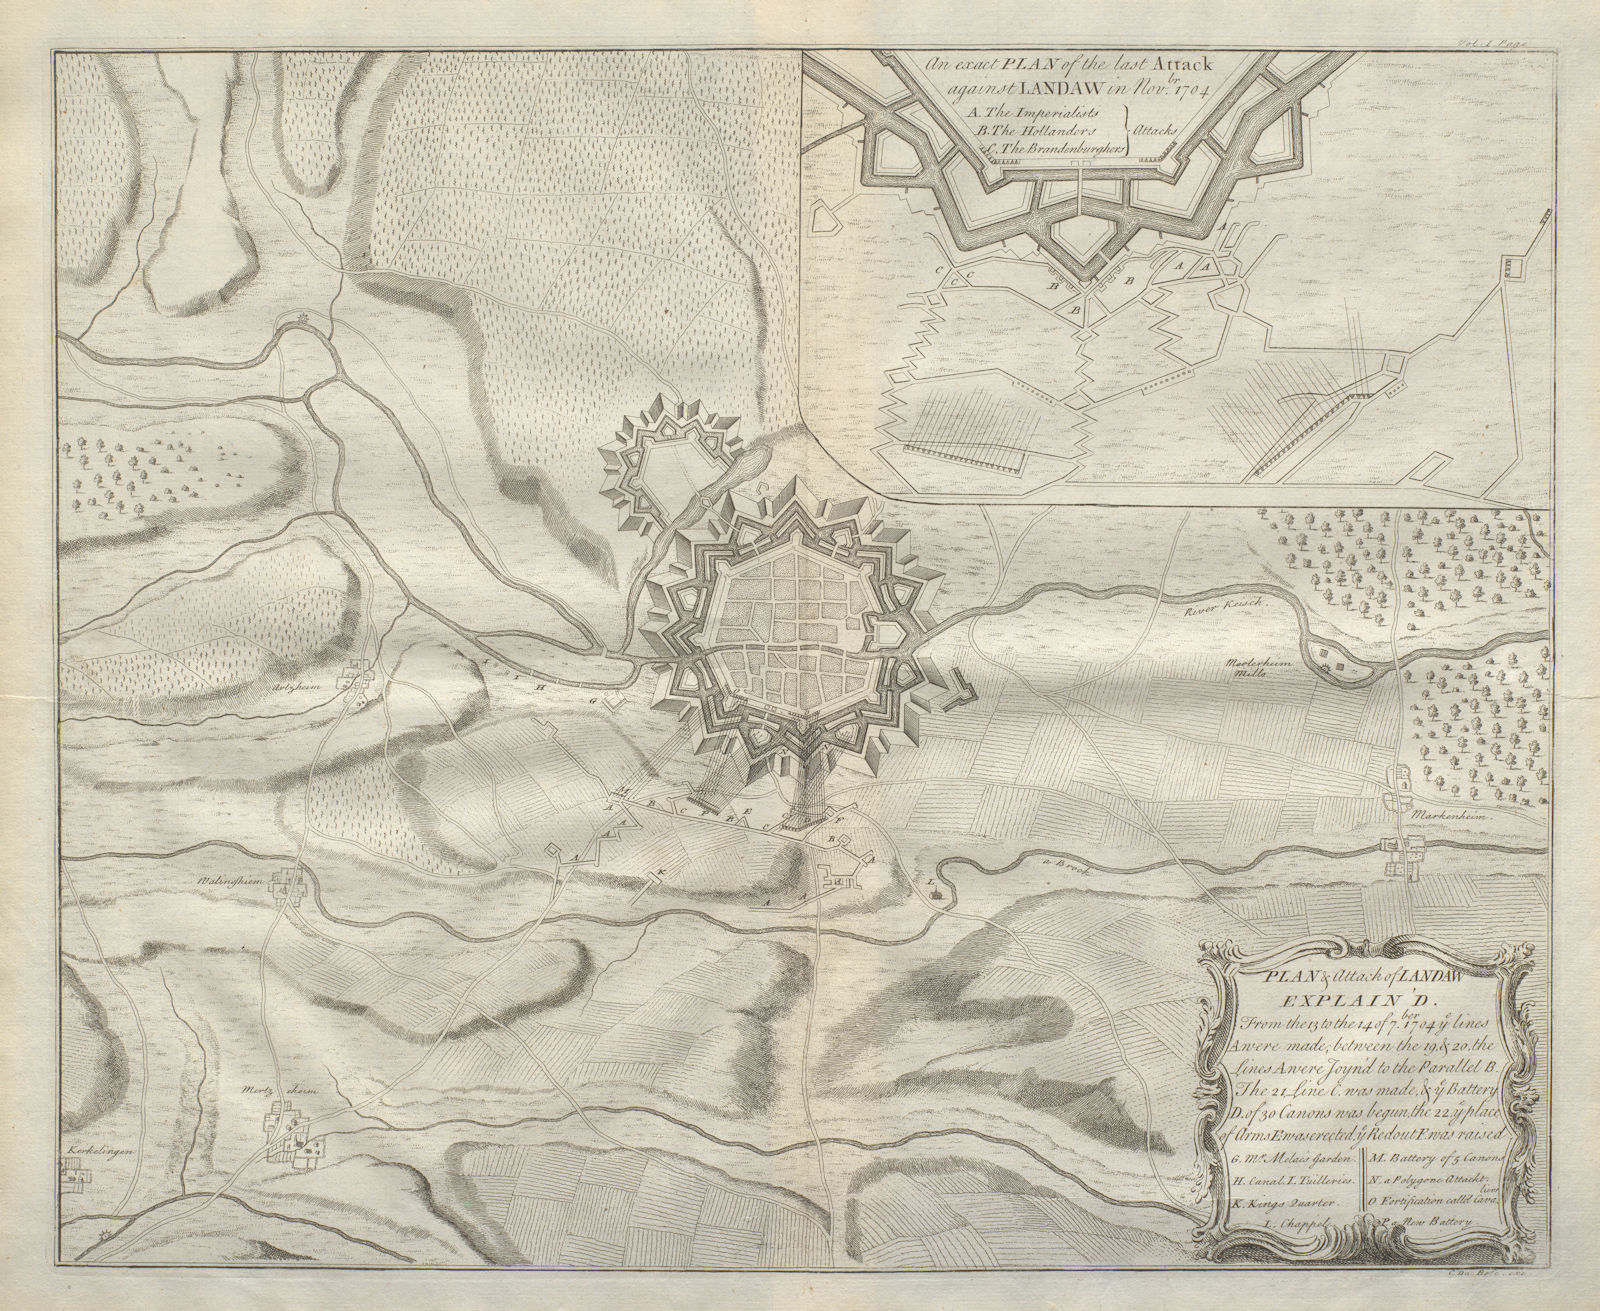 Associate Product Plan of attack of Landaw. Landau, Rhineland-Palatinate, 1704. DU BOSC 1736 map